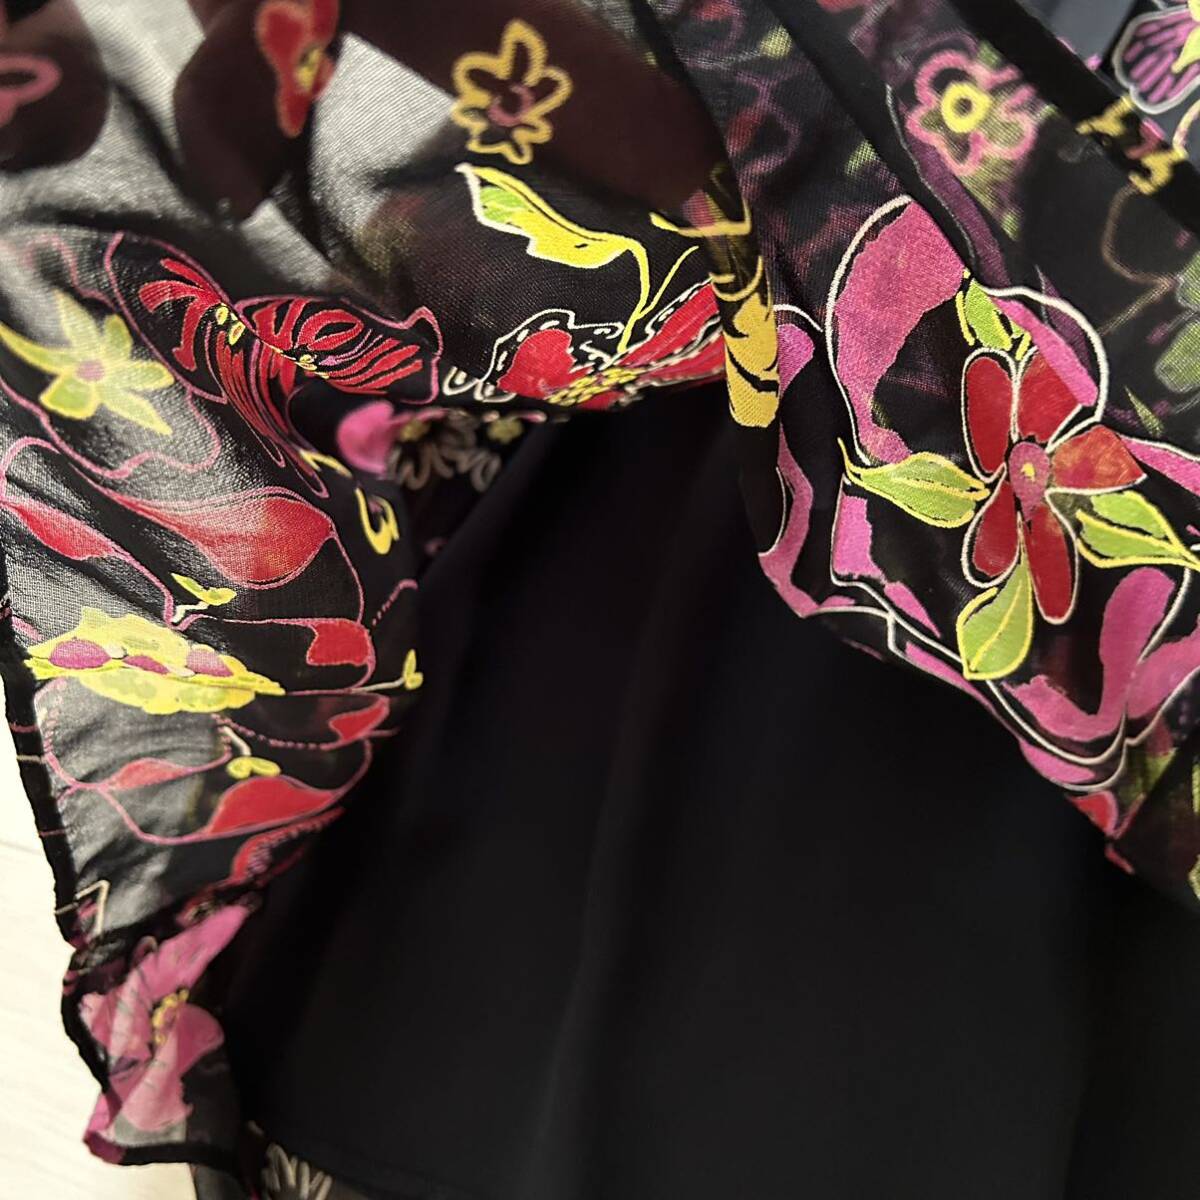 klitsia total pattern floral print flair skirt three . association beautiful goods 40